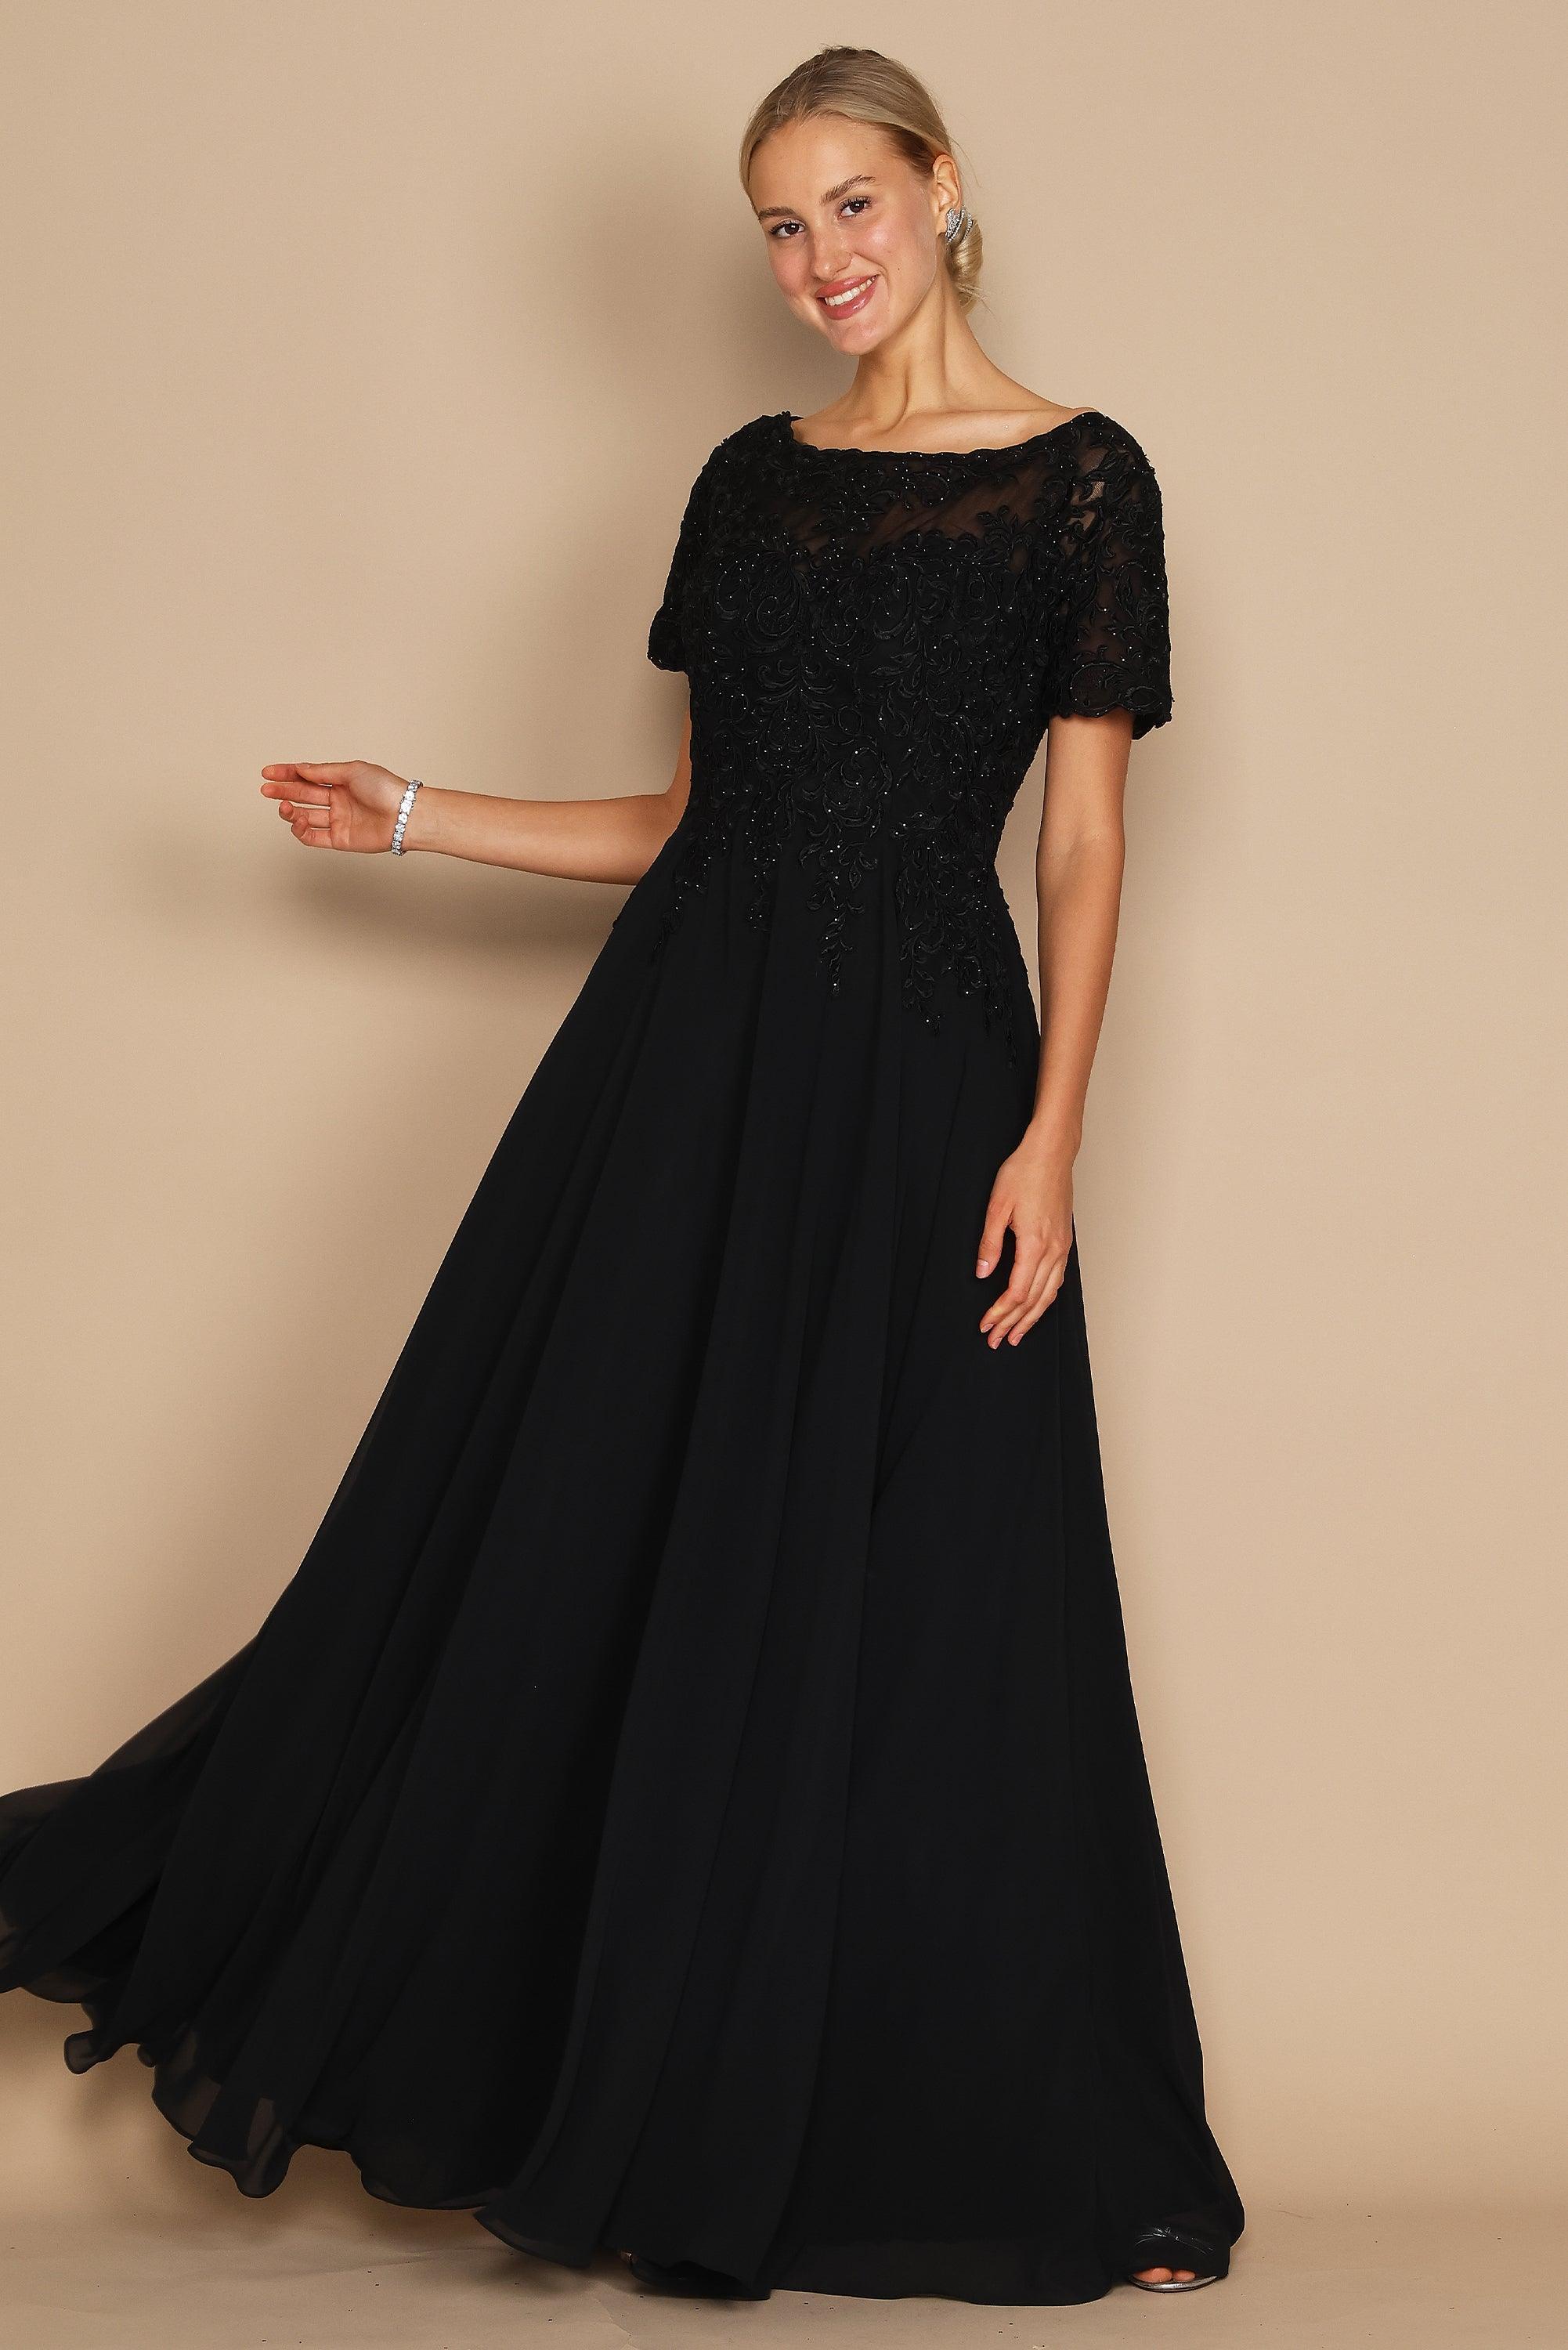 Jovani Bridal S50581 Short Sleeve Beaded Wedding Gown Overskirt Lace C –  Glass Slipper Formals